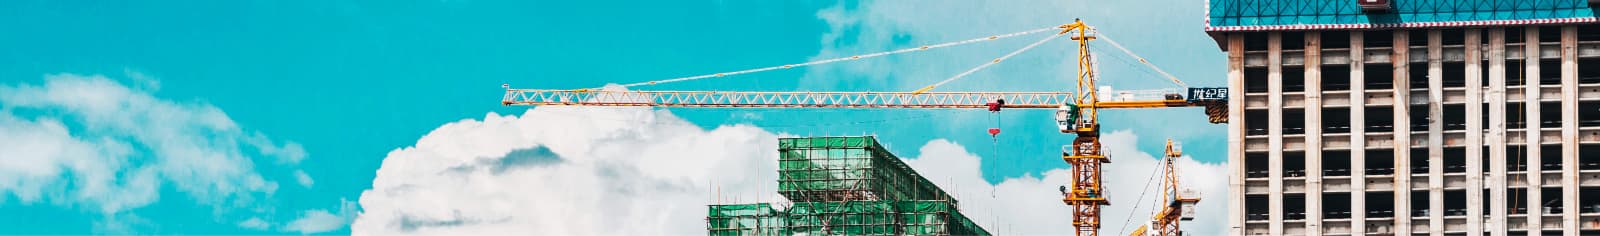 A crane at a construction site